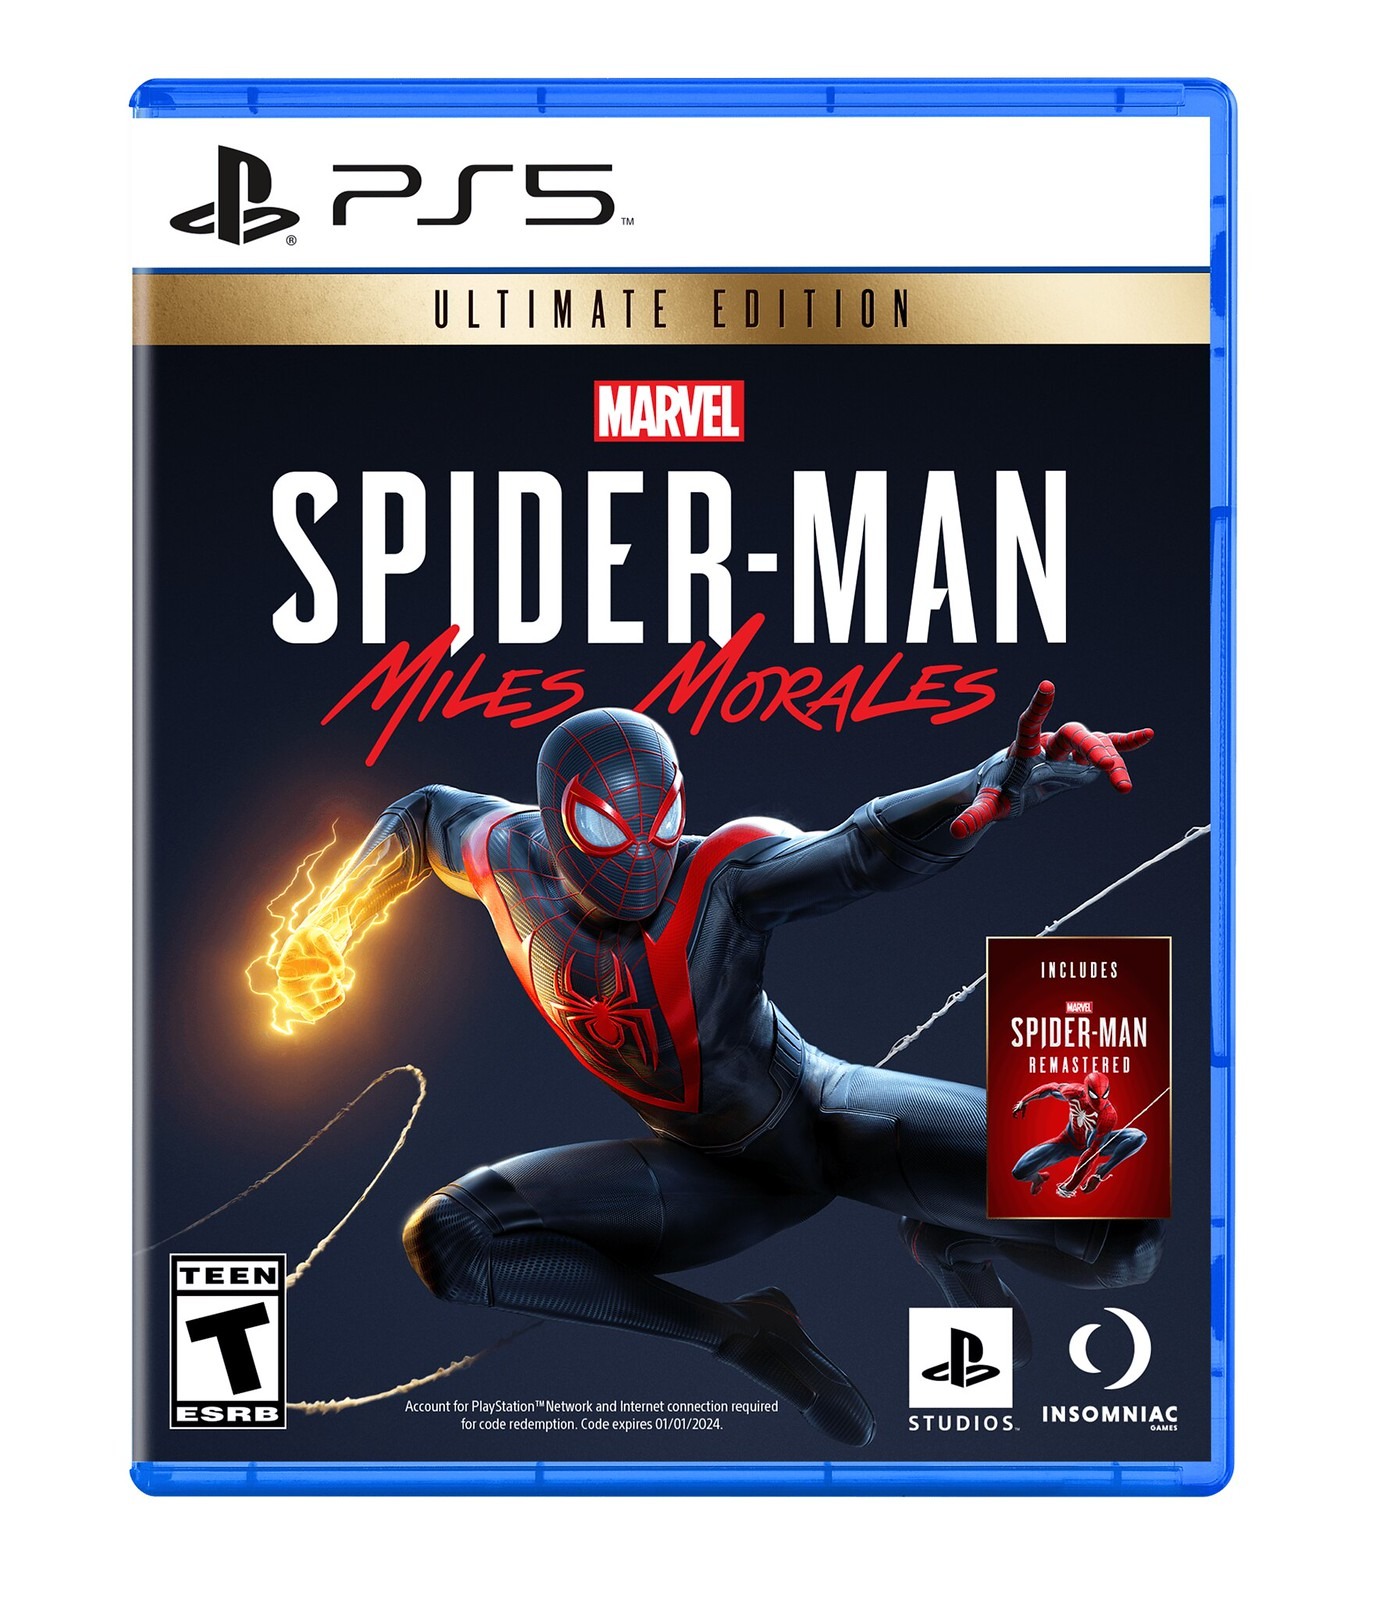 Marvel S Spider Man Miles Morales 限定版付属のps5用リマスター Marvel S Spider Man はps4版とセーブデータ互換なし Game Spark 国内 海外ゲーム情報サイト